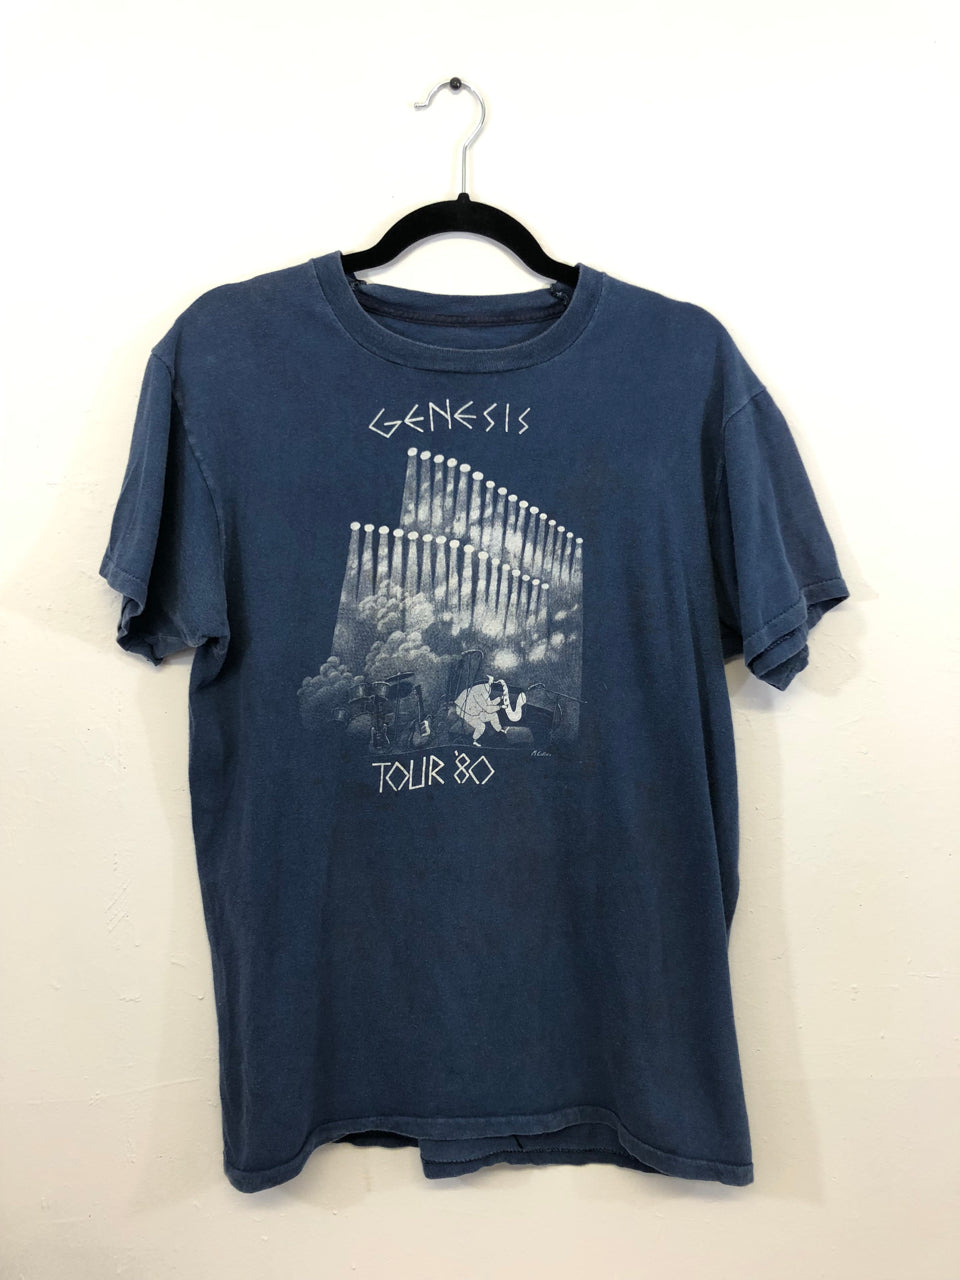 Genesis Tour '80 T-Shirt